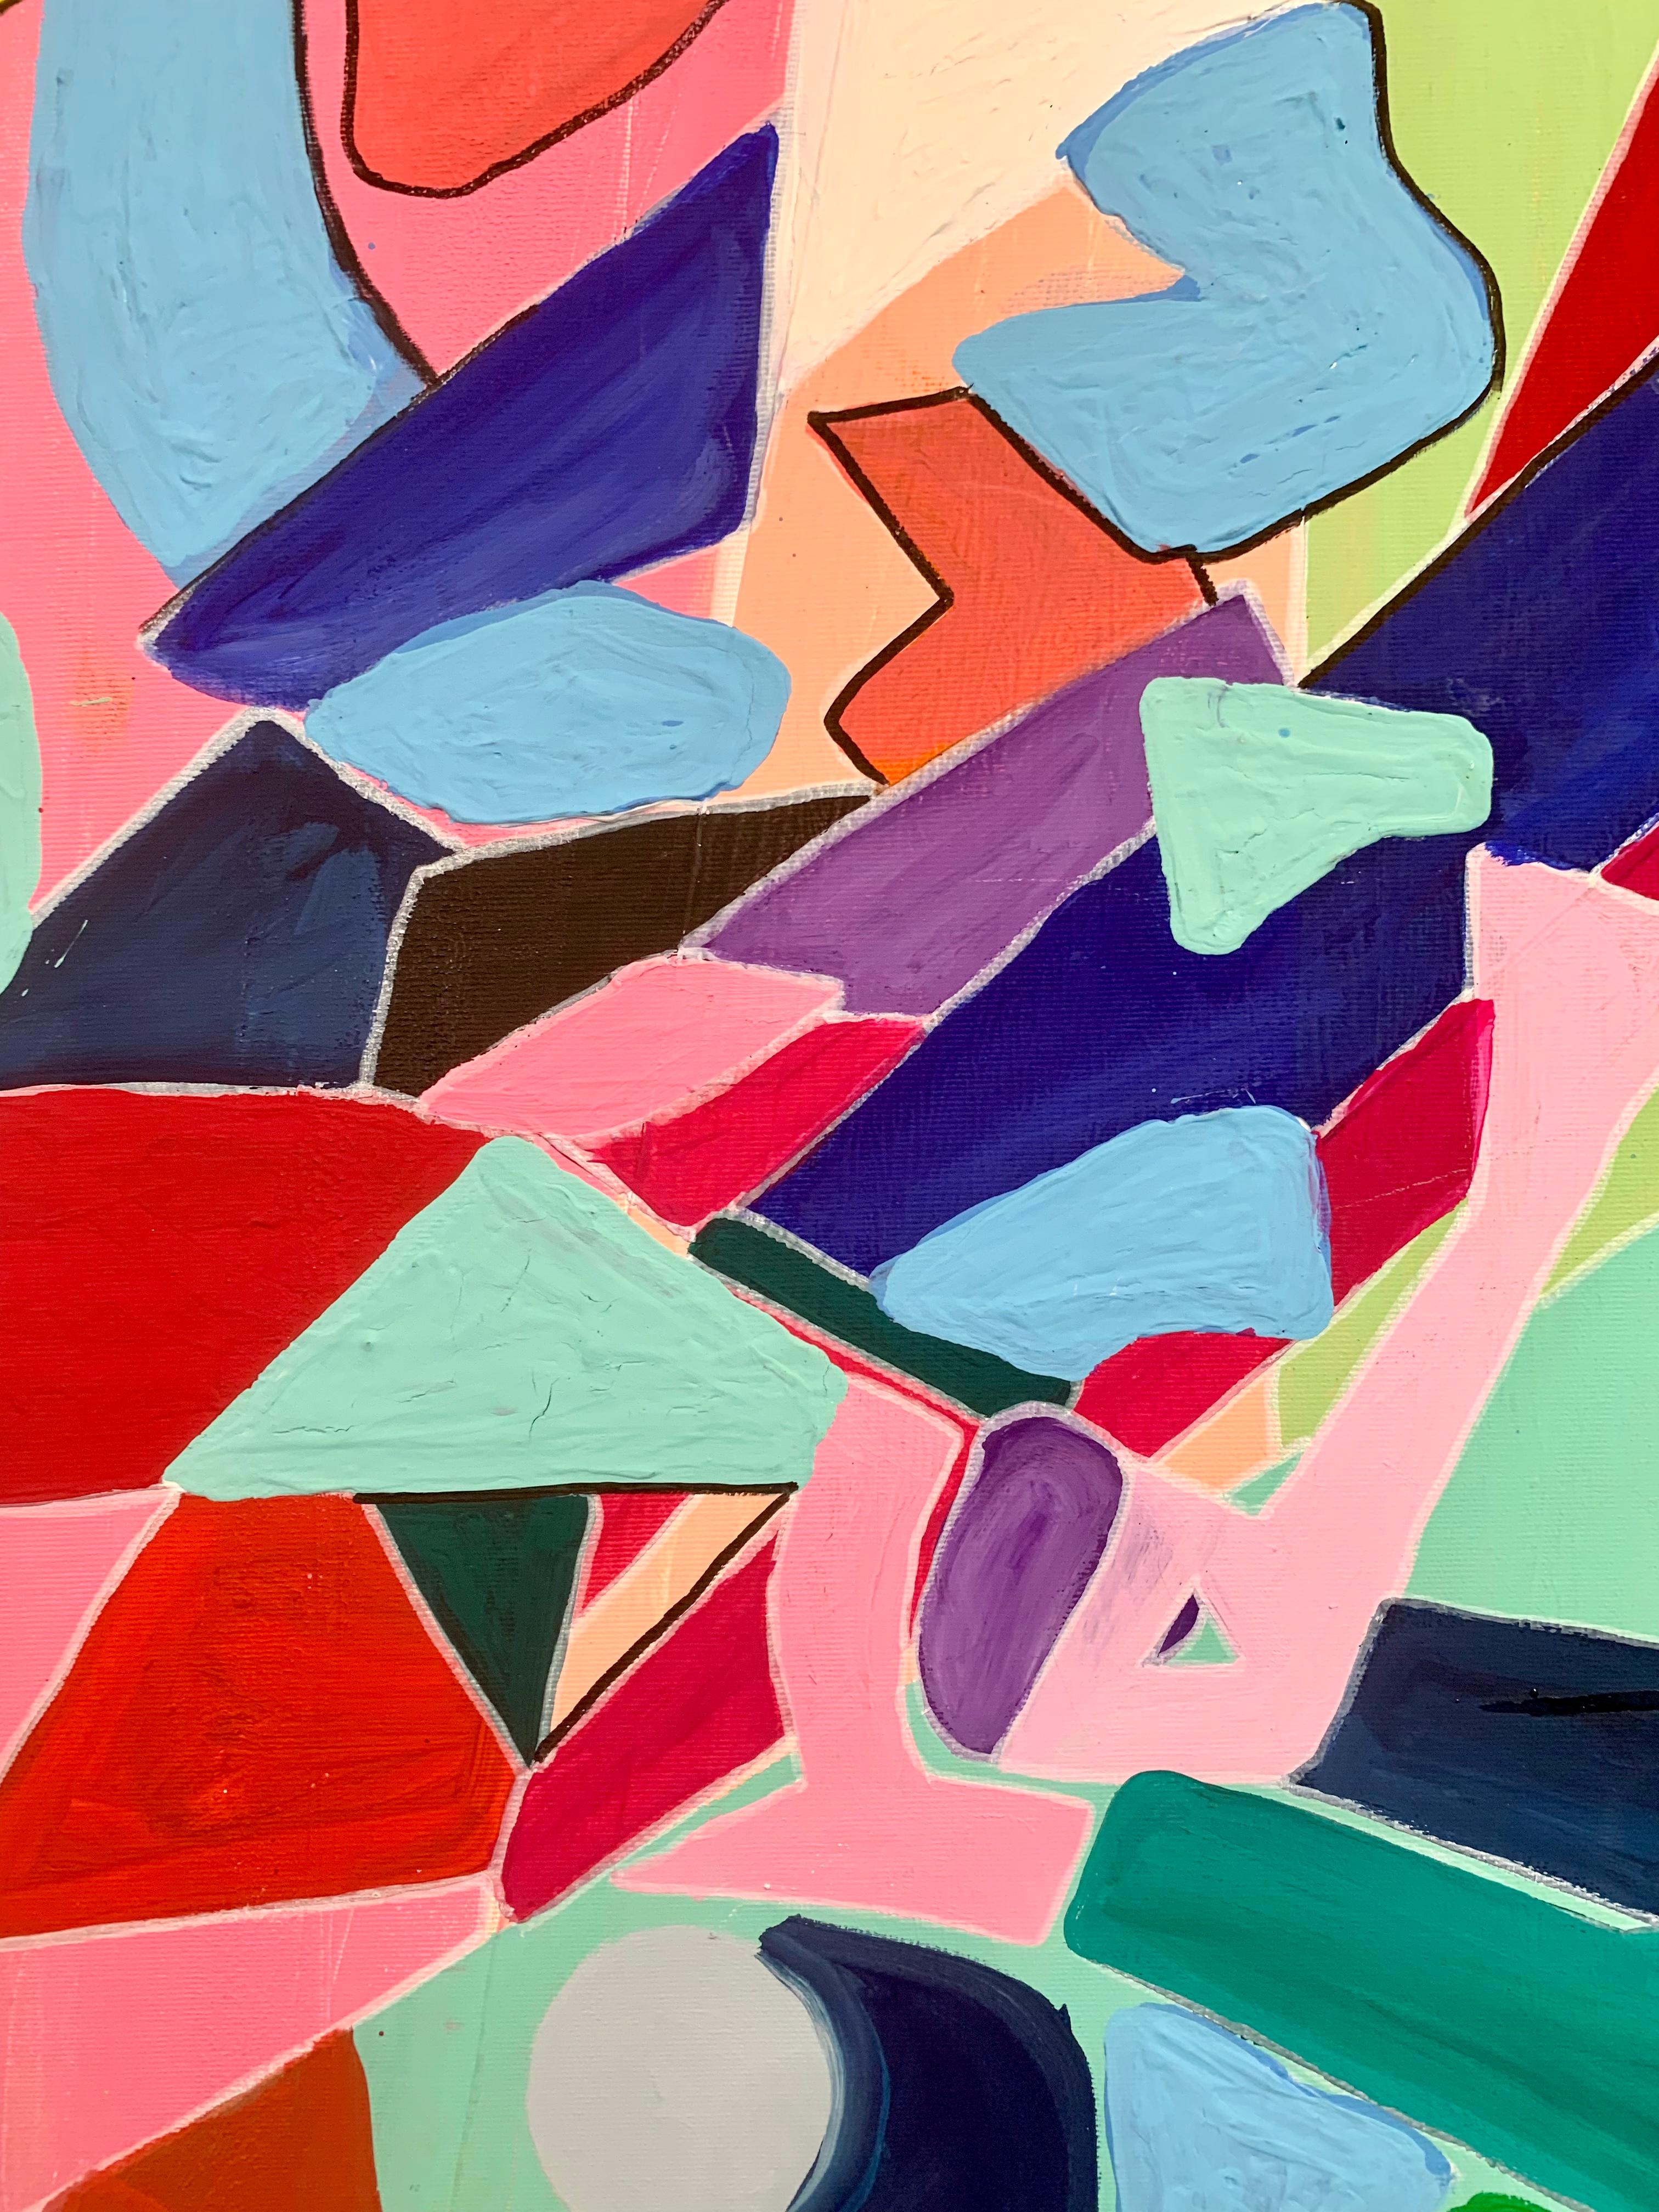 Missing Puzzle Piece by K. Husslein - geometric colorful abstract painting  - Abstract Painting by Katharina Husslein